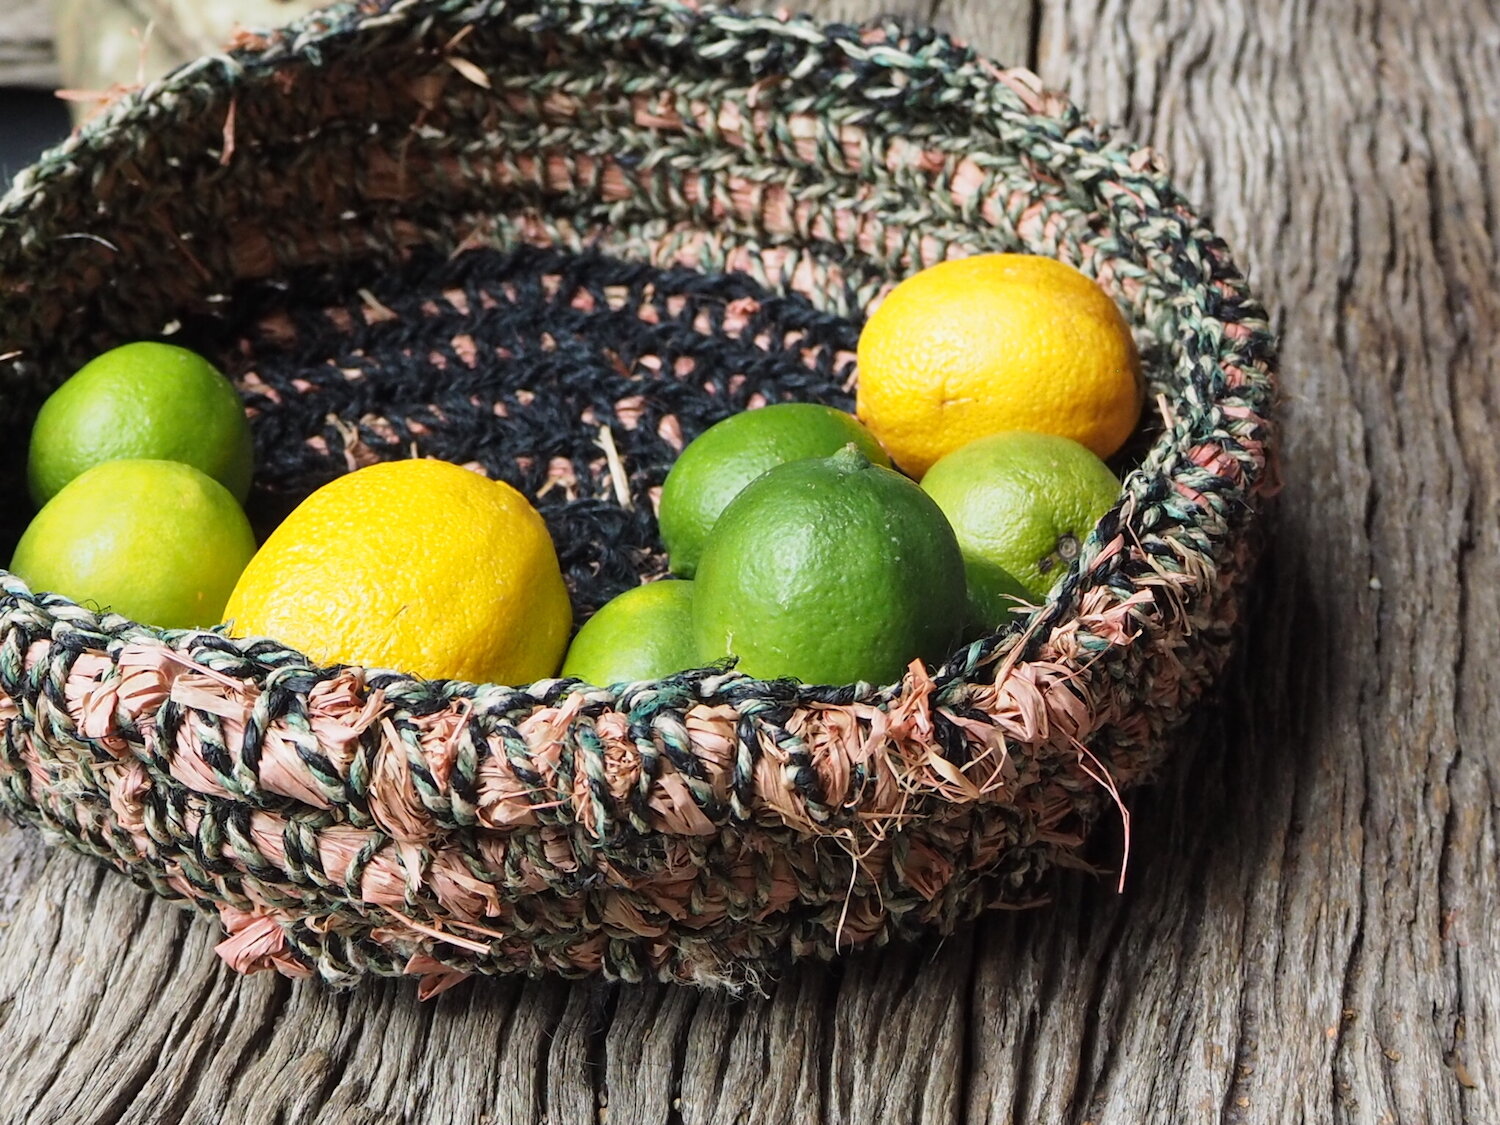 Ellie Beck Petalplum raffia crochet basket and citrus.JPG